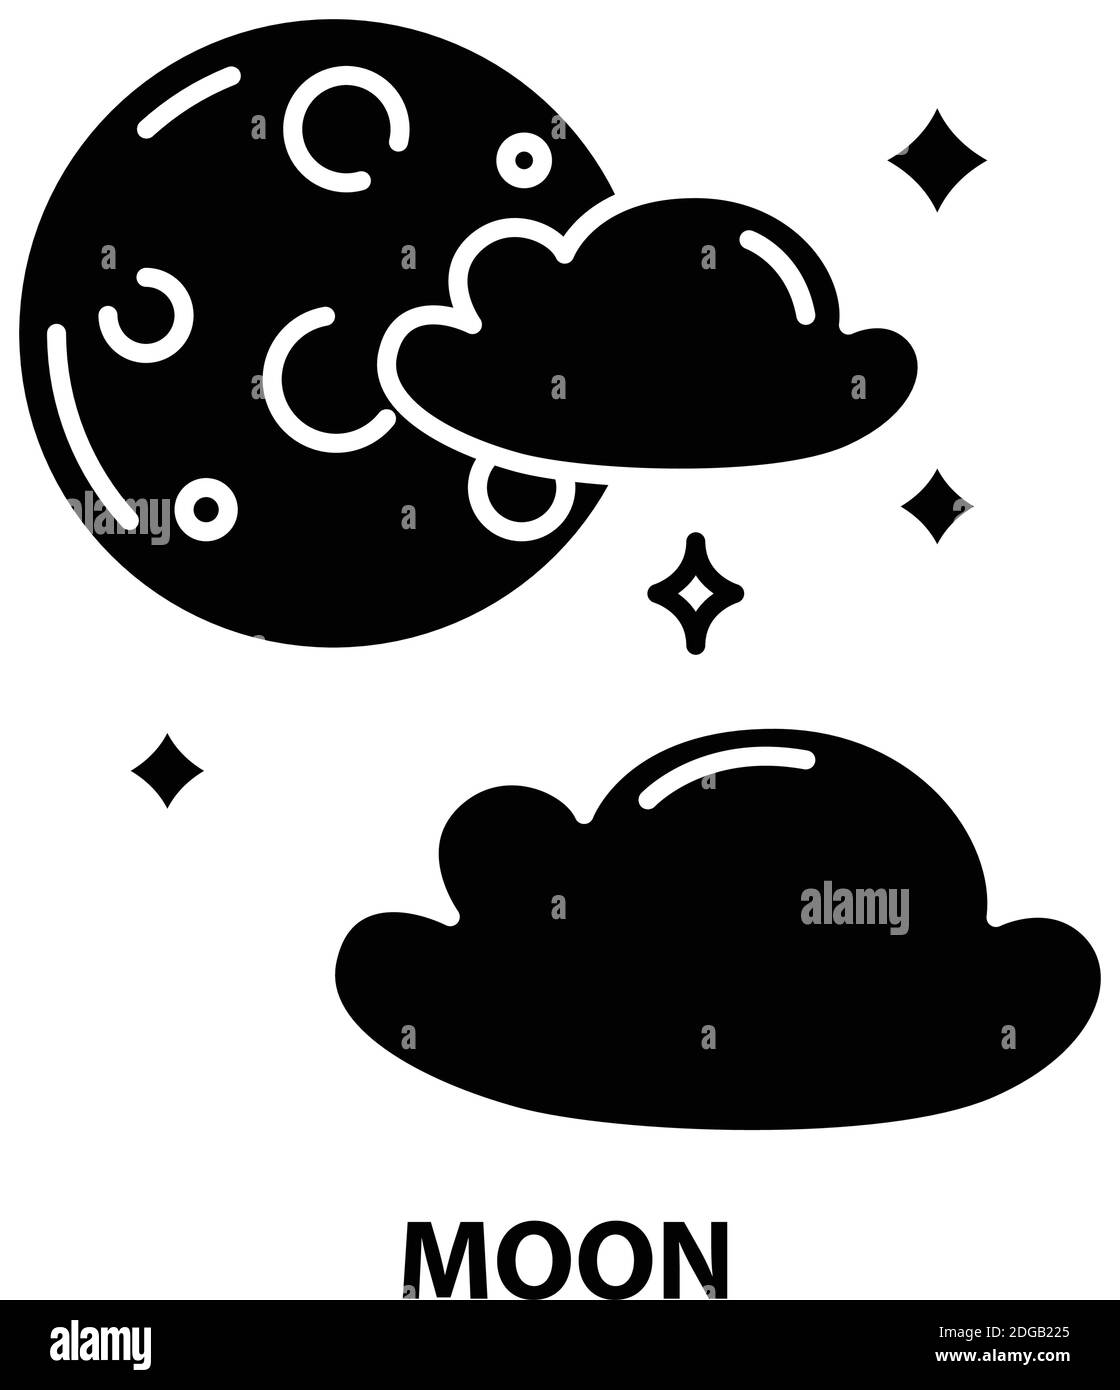 moon icon, black vector sign with editable strokes, concept illustration Stock Vector